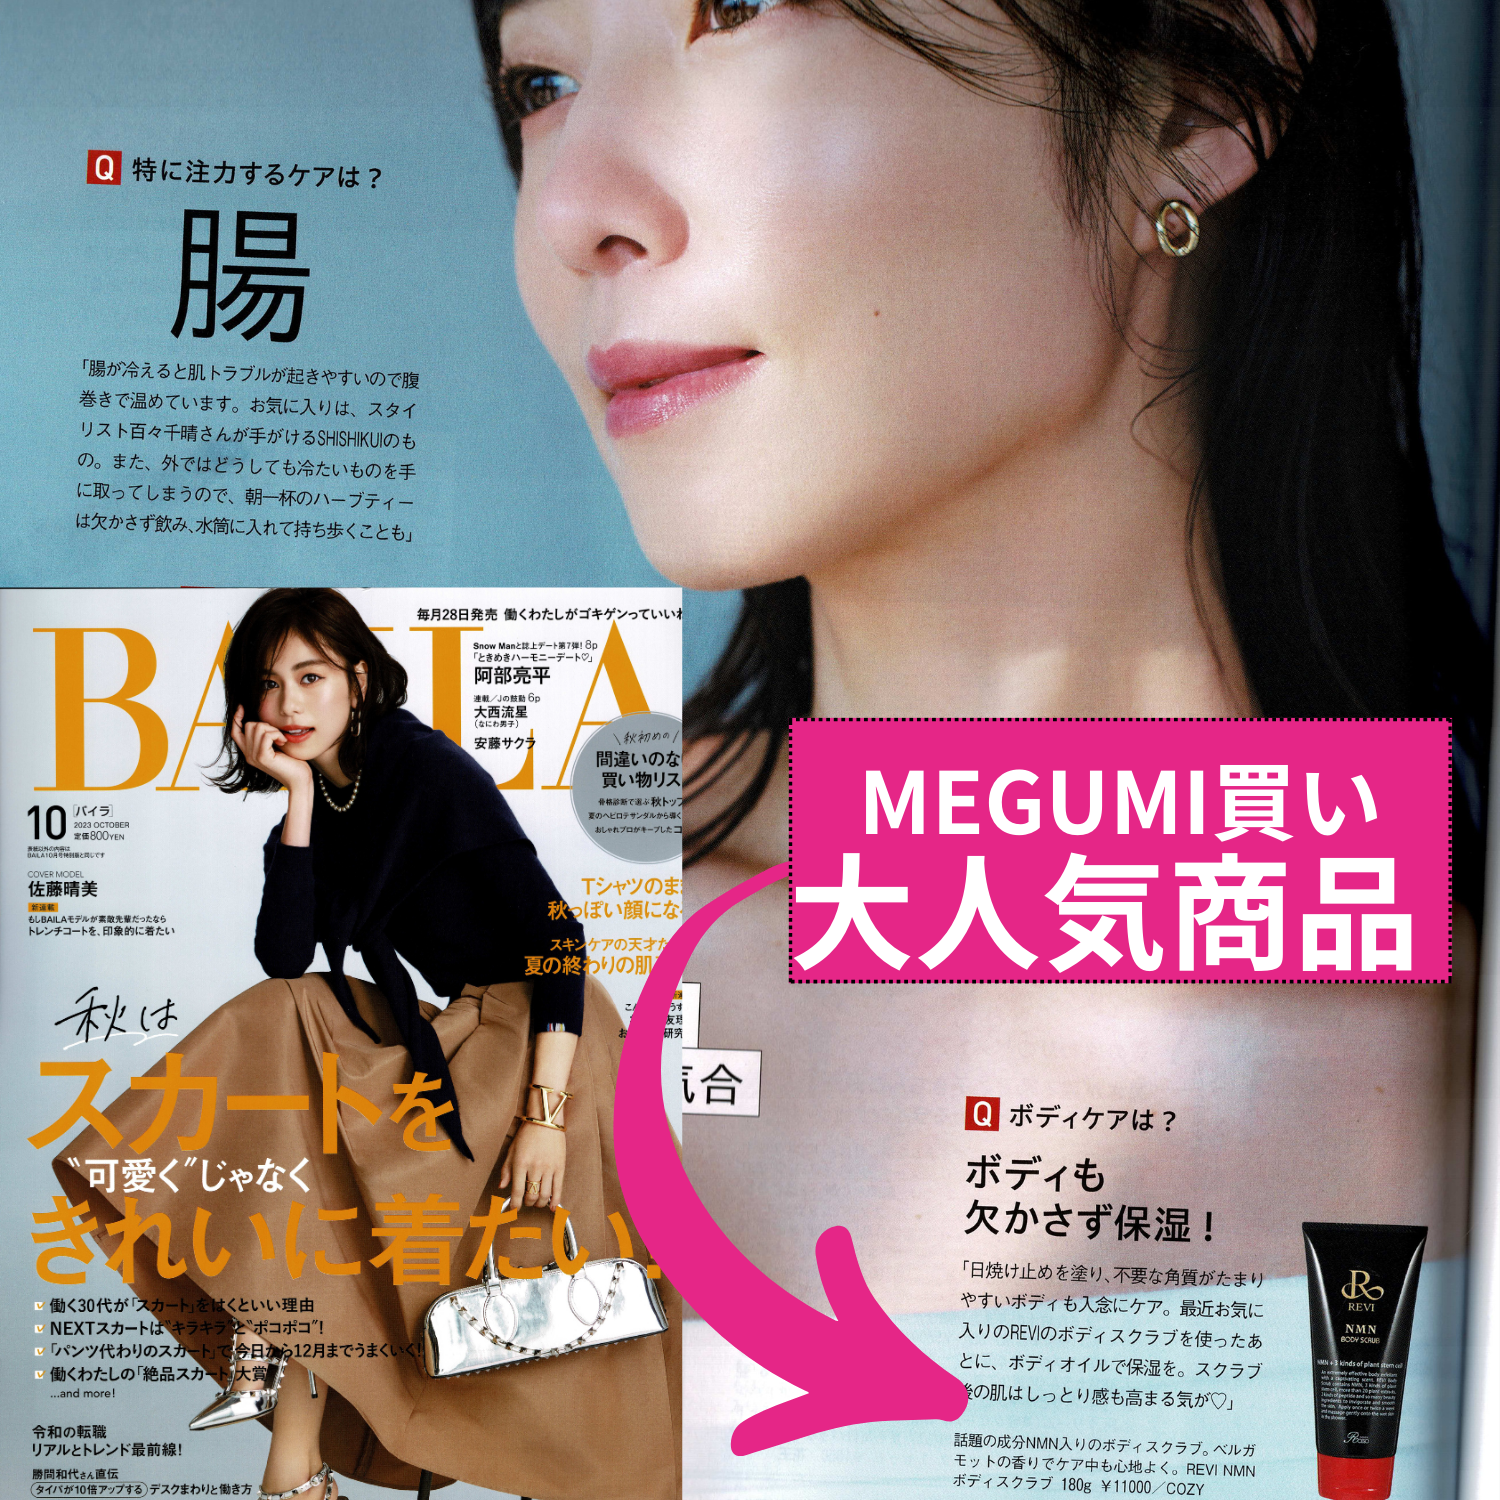 MEGUMIさんが雑誌で紹介! 最新美容アイテムでつるすべ肌を手に入れよう